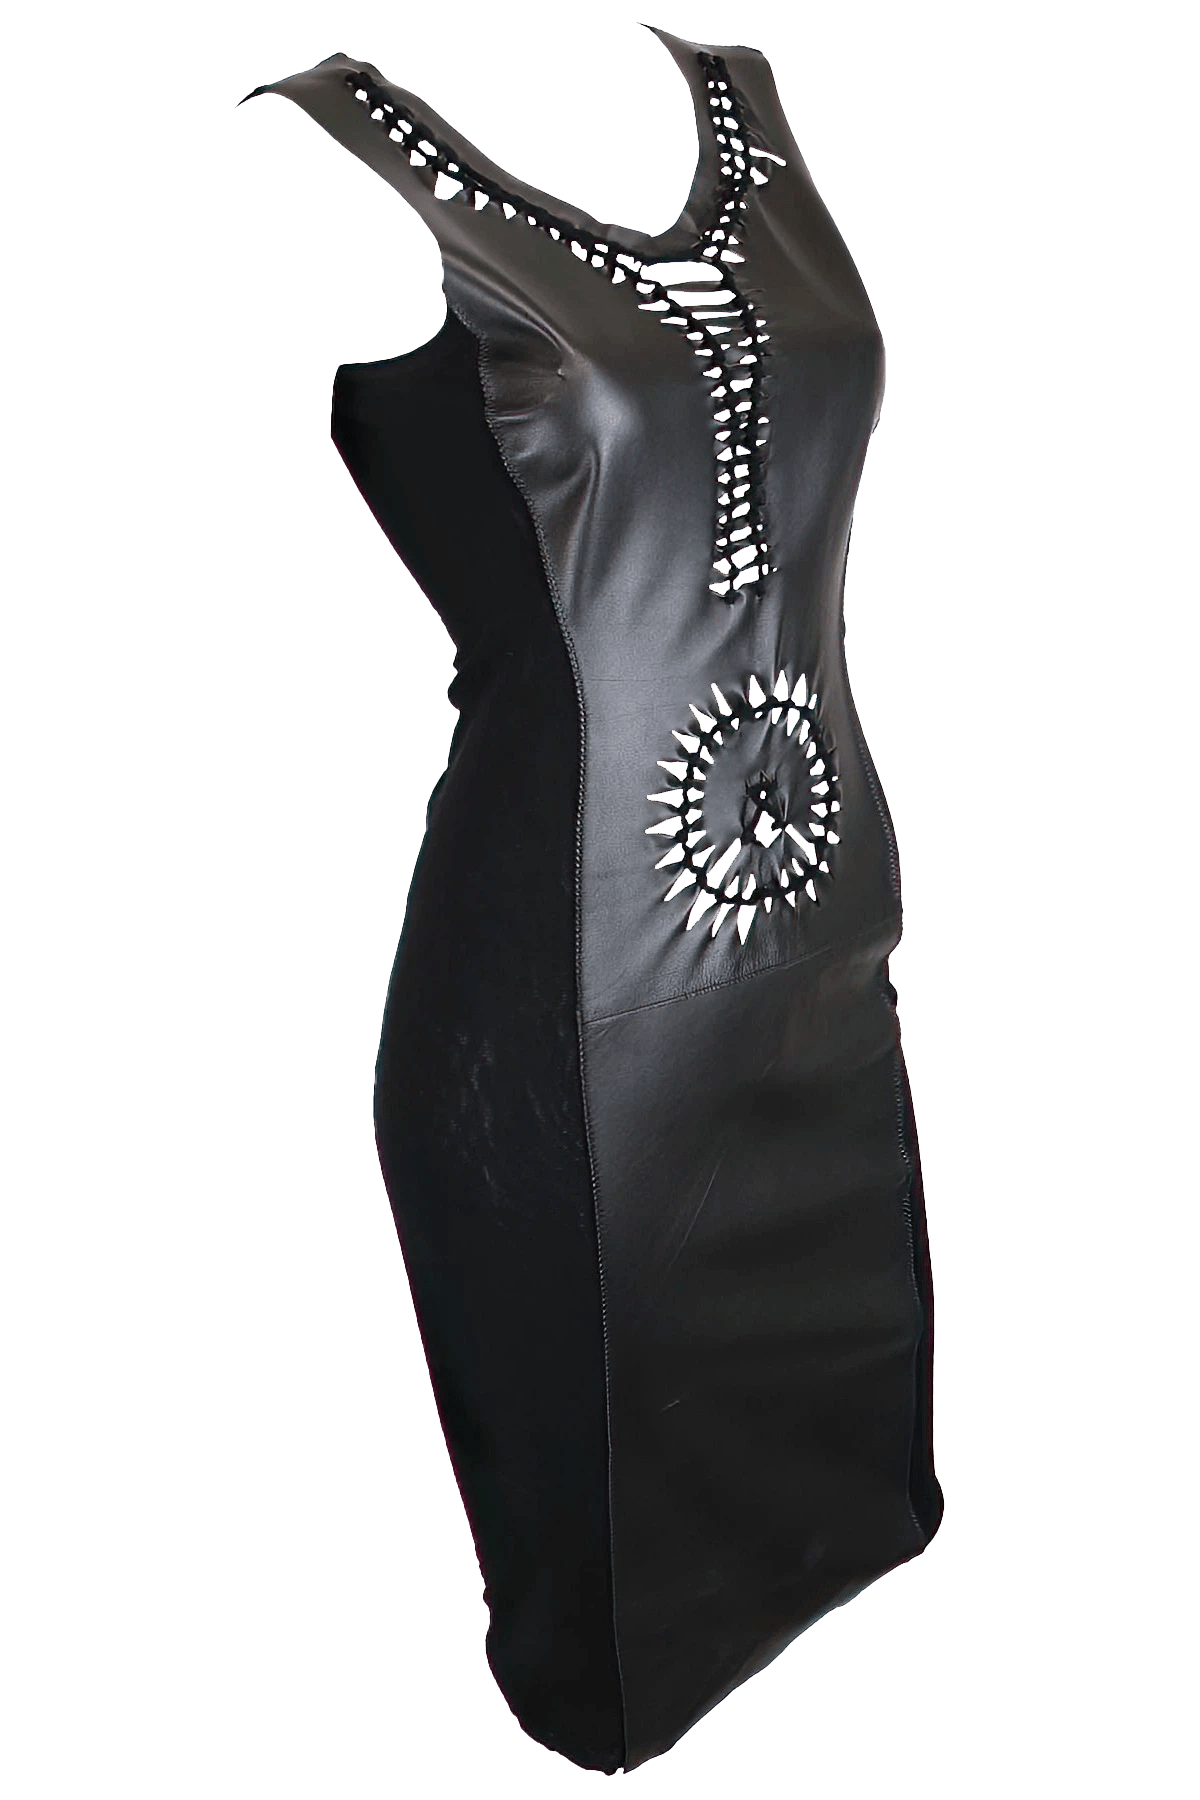 Jean Paul Gaultier Soleil Leather Cut Out Dress - Foxy Couture Carmel